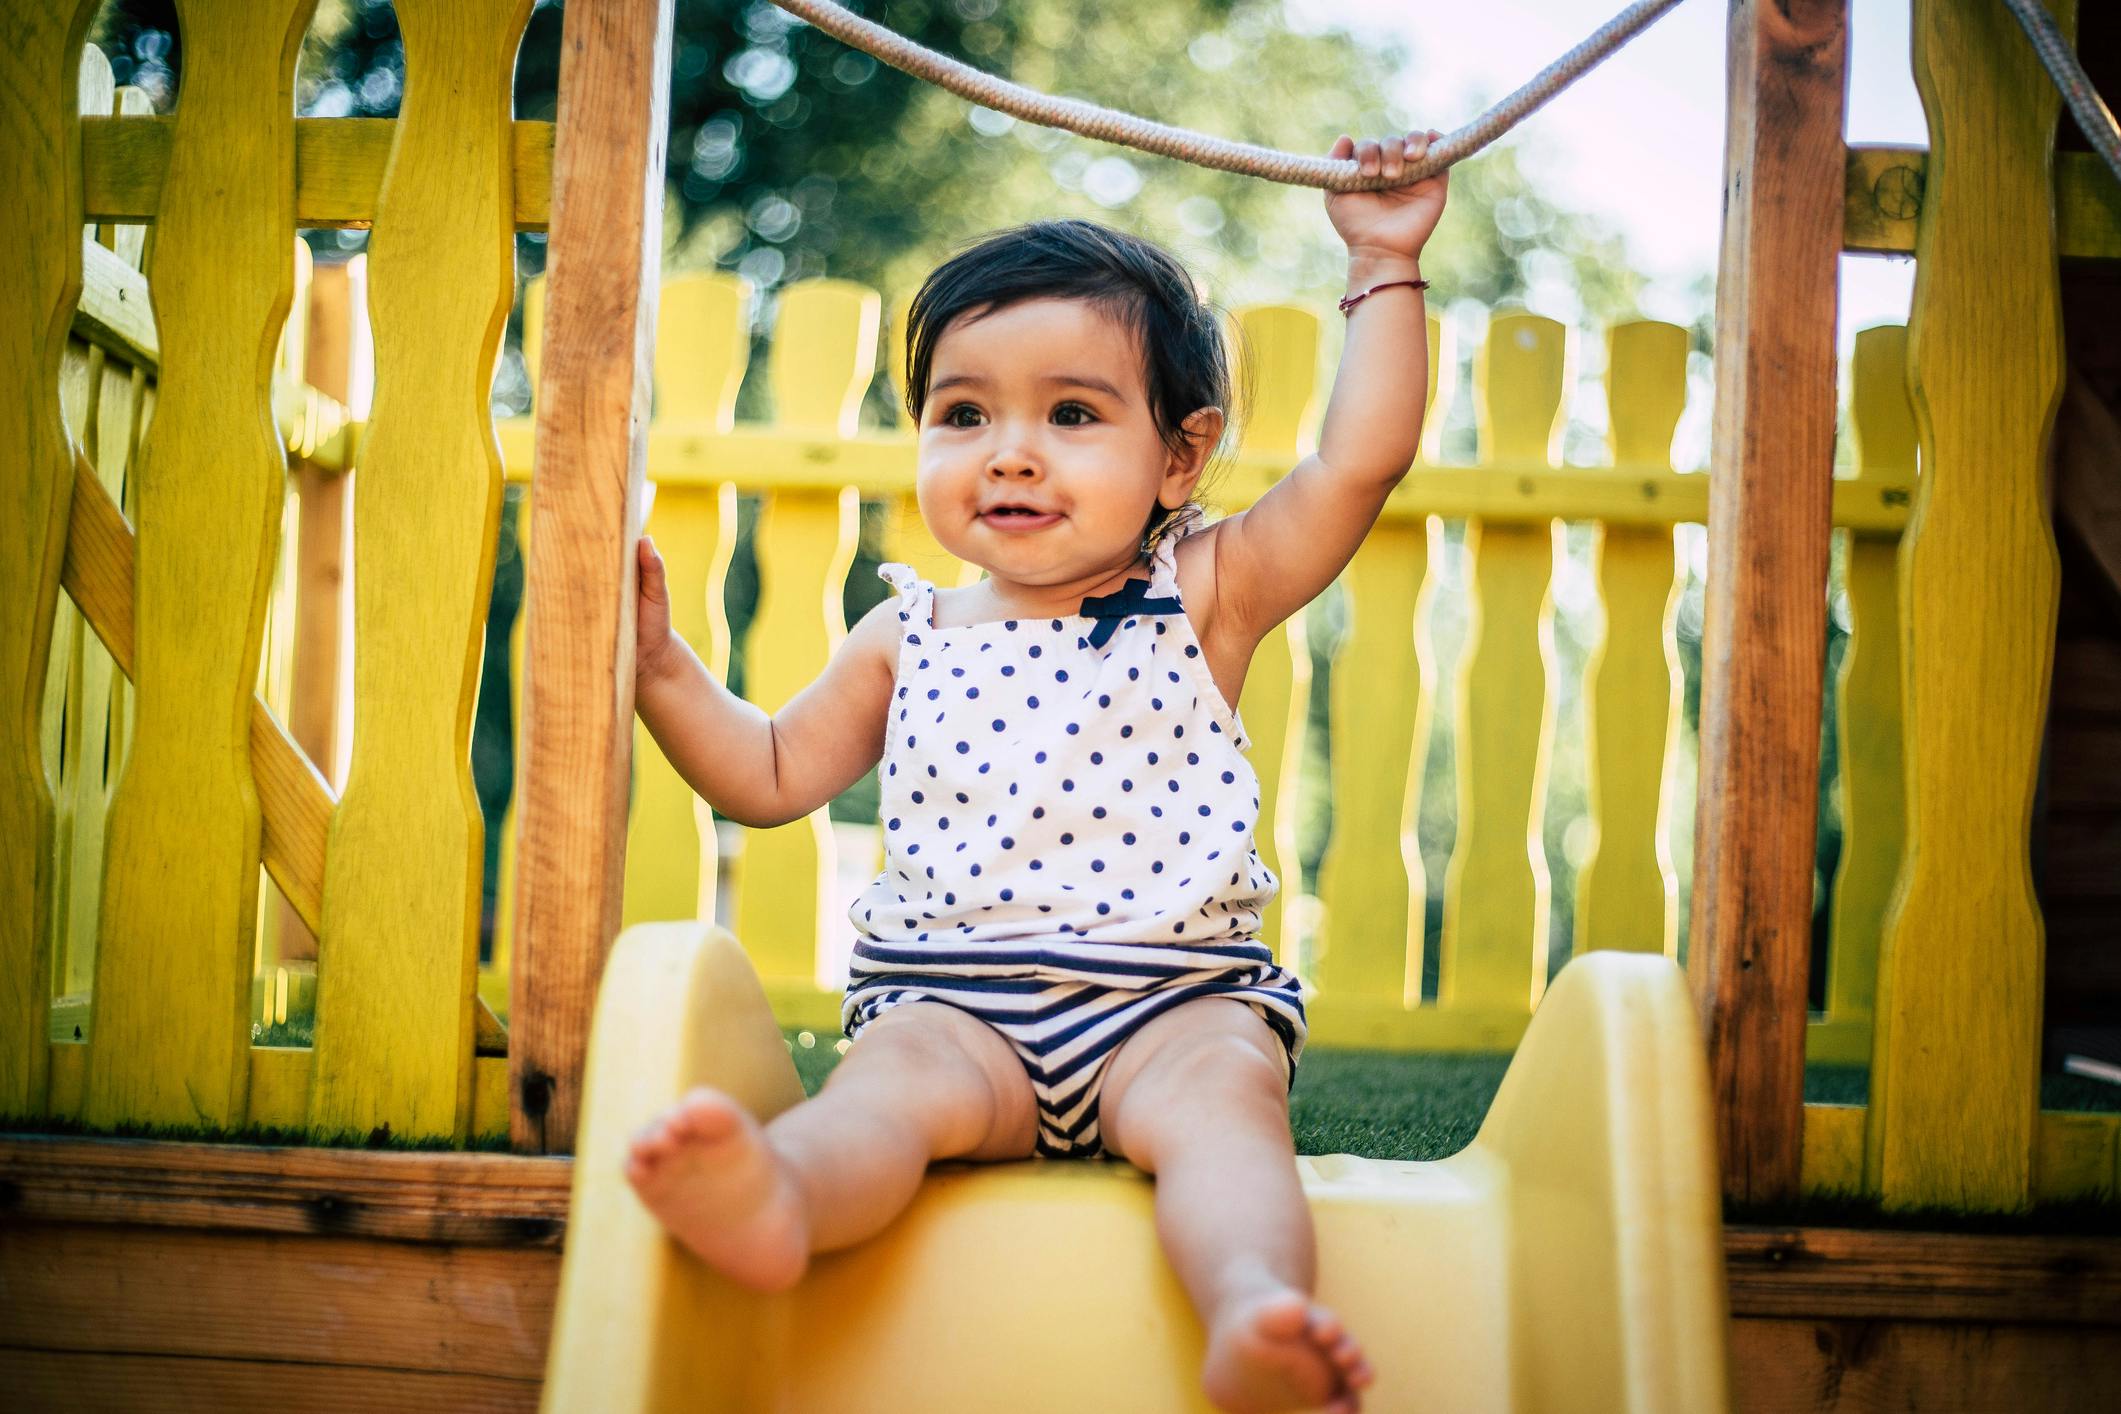 Top Baby Names 2021: The Playground Analysis